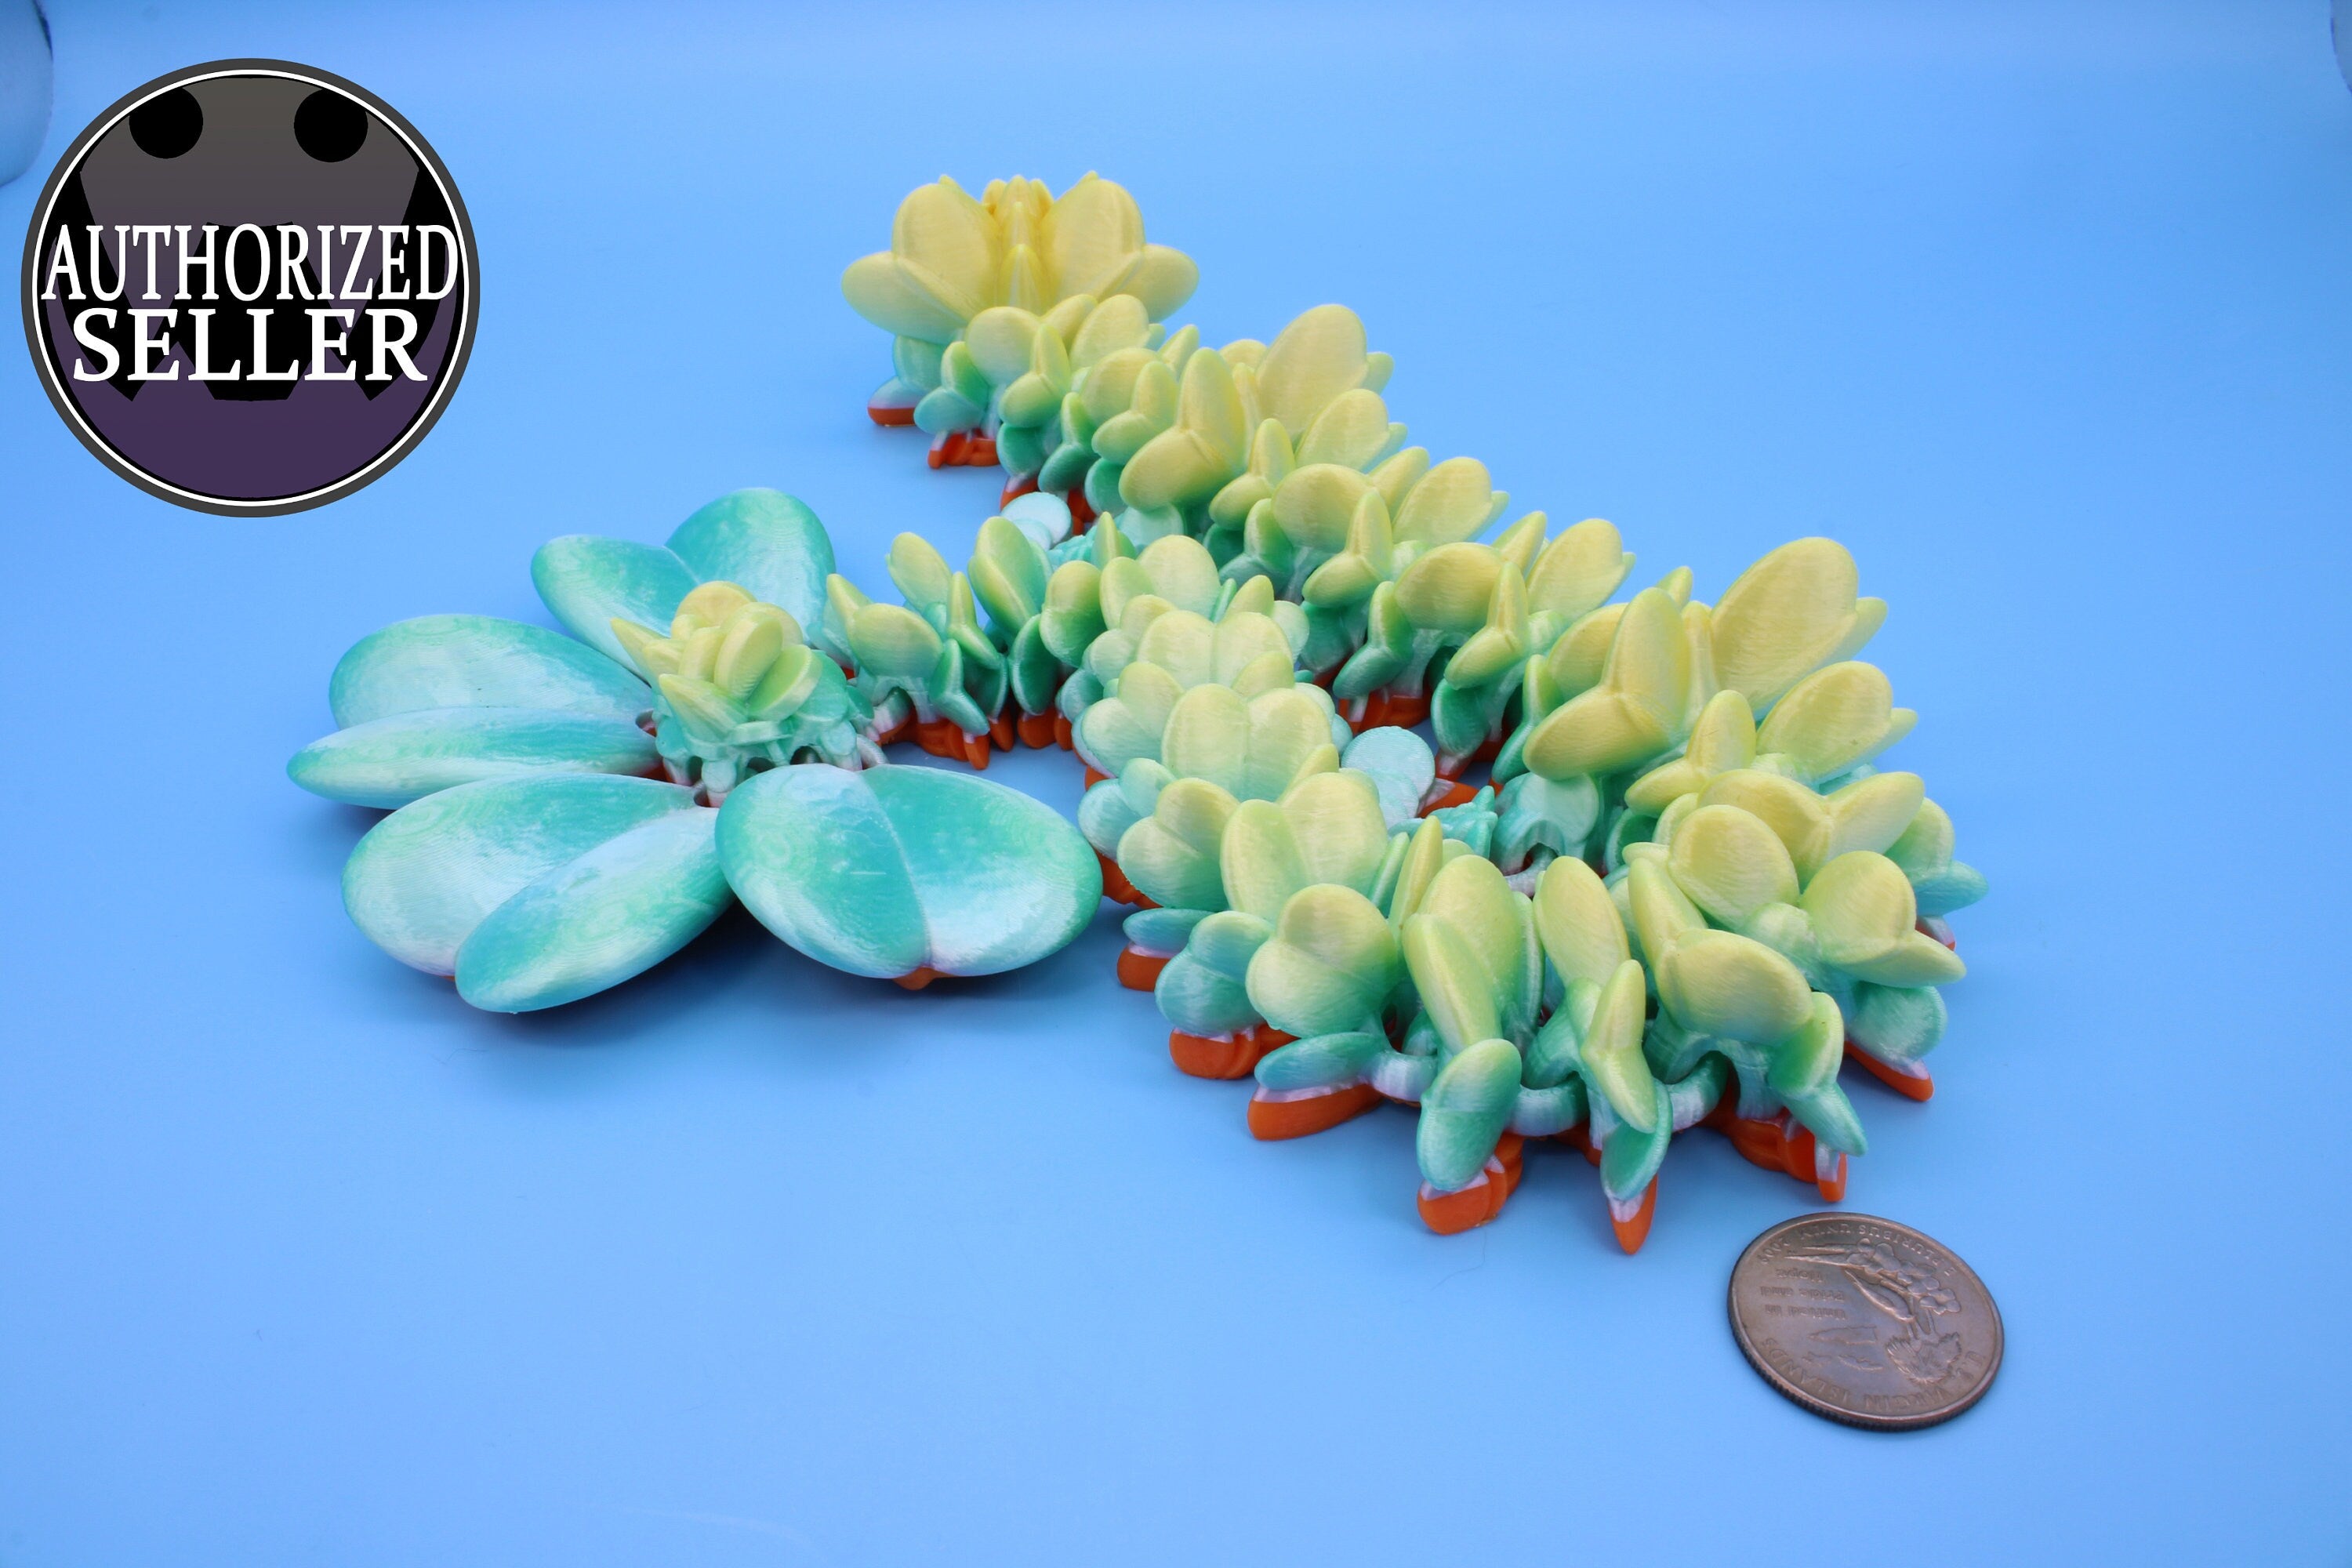 Clover Dragon | Rainbow | 3D printed Articulating Dragon Fidget Toy | Flexi | 19 in. Lucky Dragon | Four Leaf Clover Dragon.